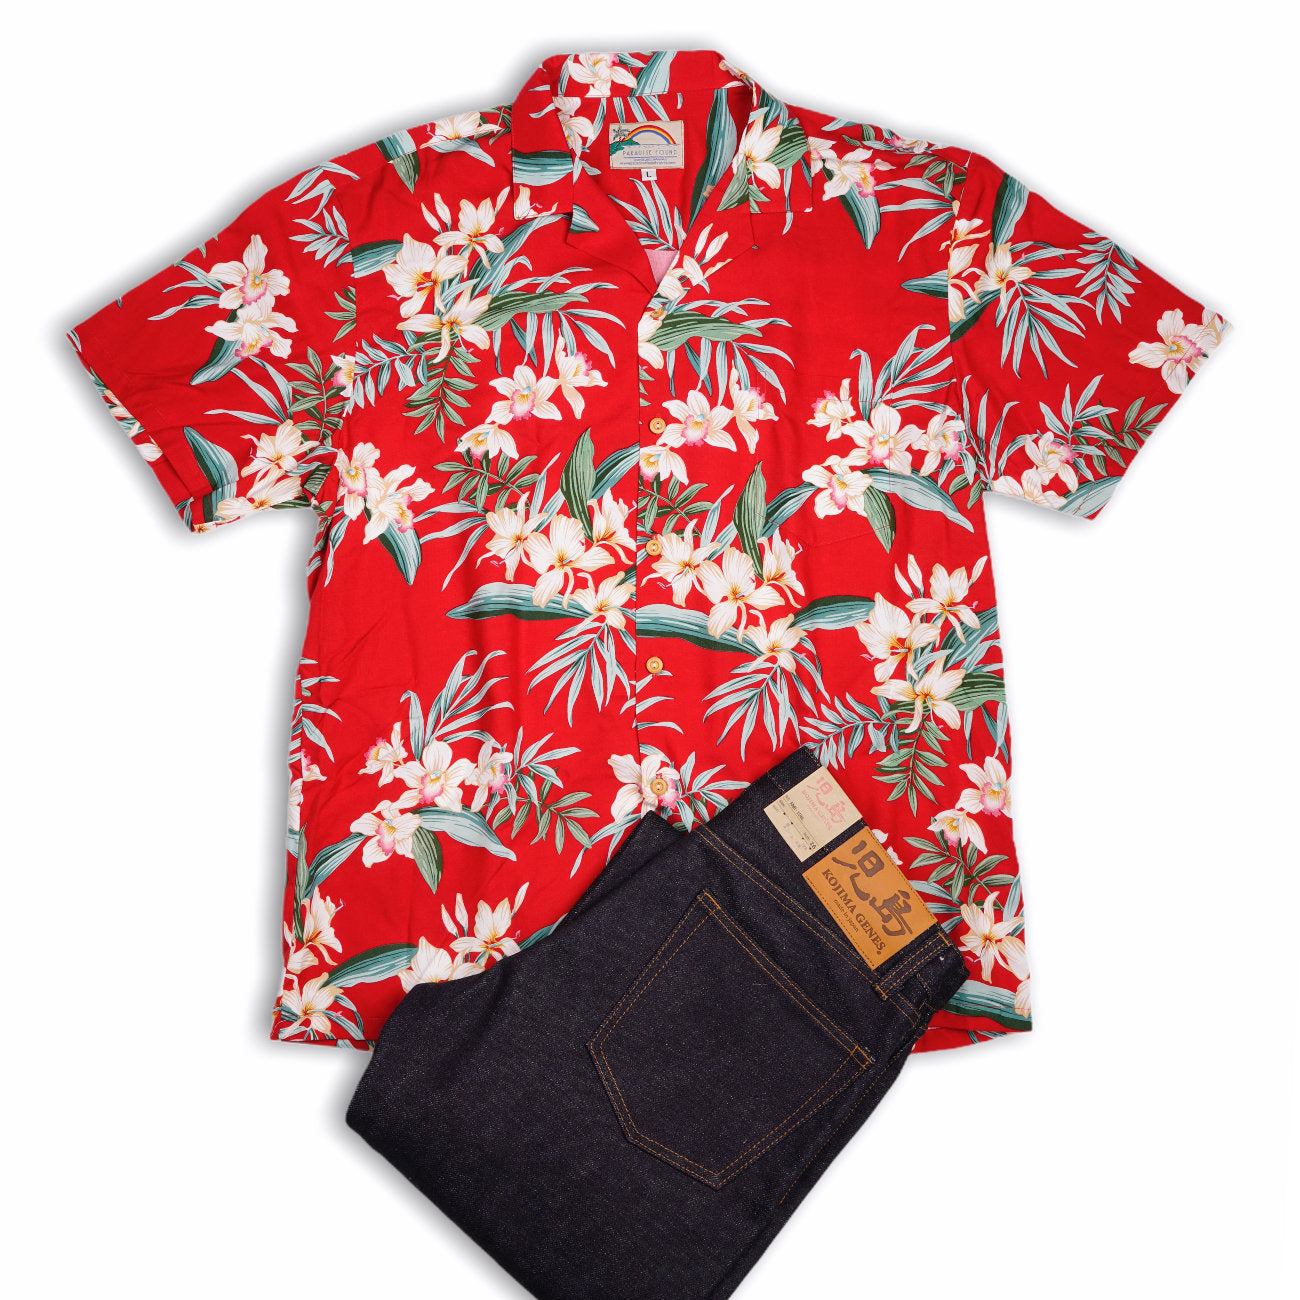 paradise found hawaii shirt